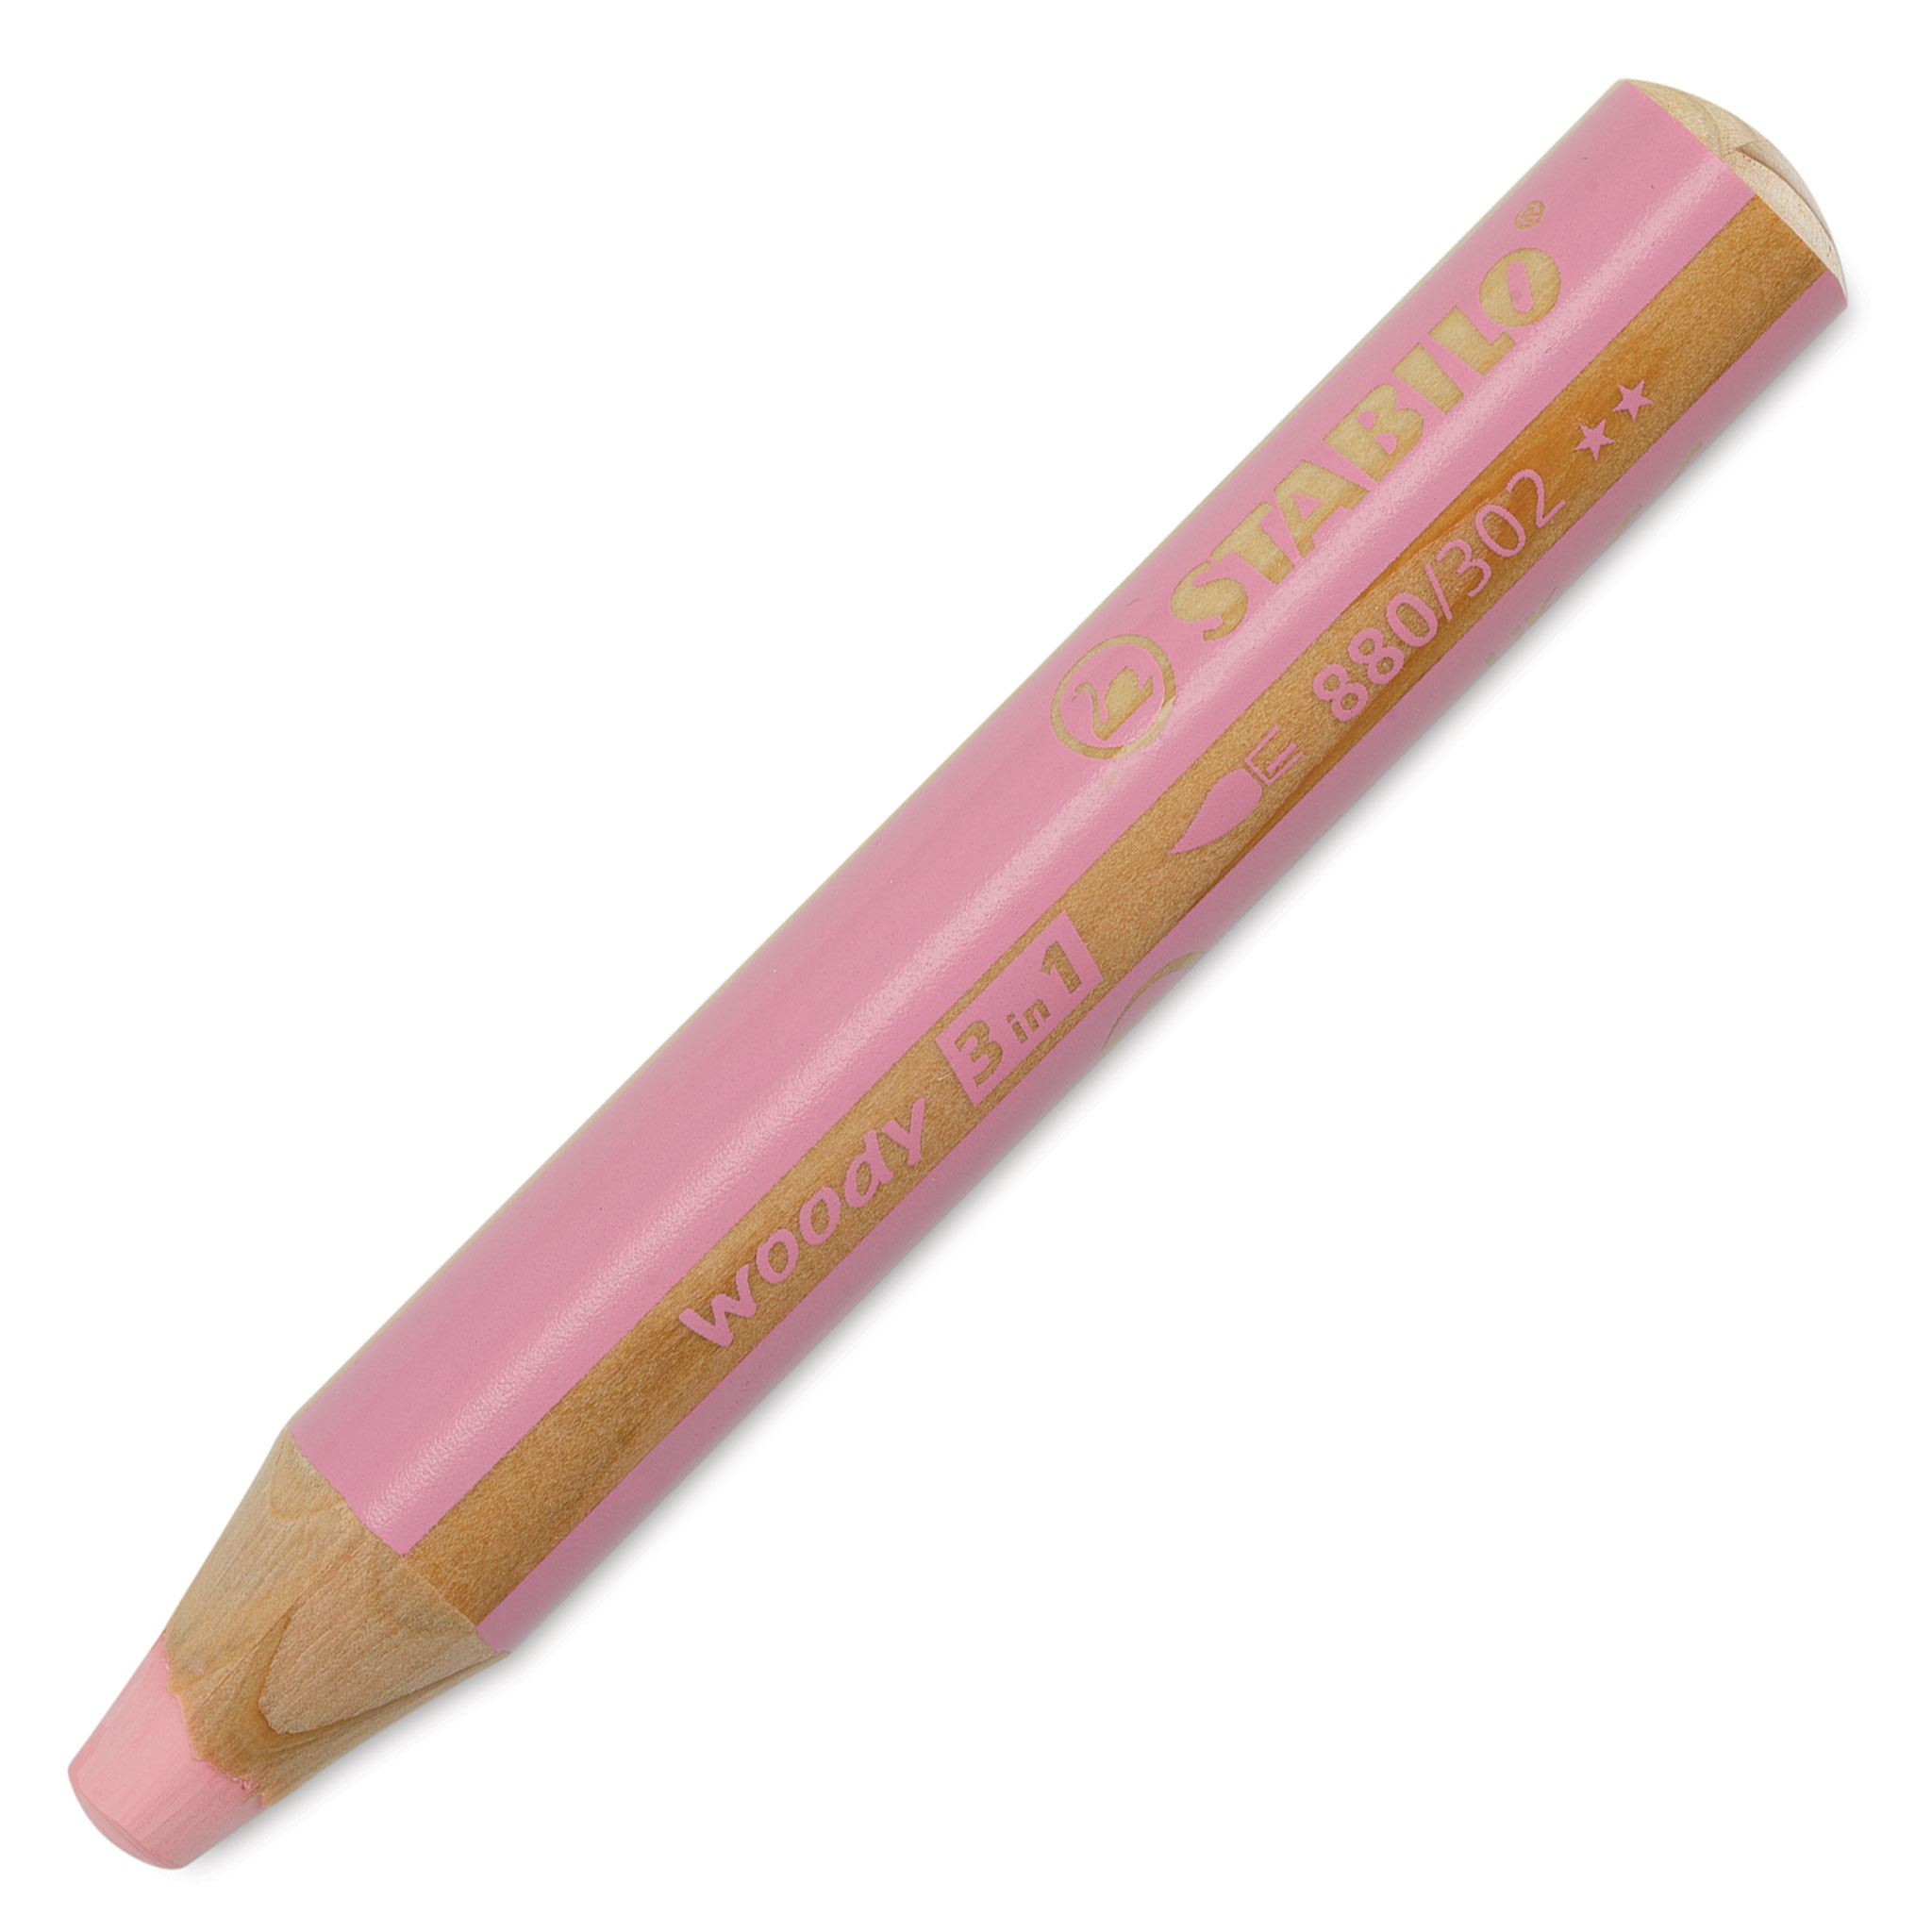 Stabilo Woody 3 in 1 Pencil - Pastel Pink